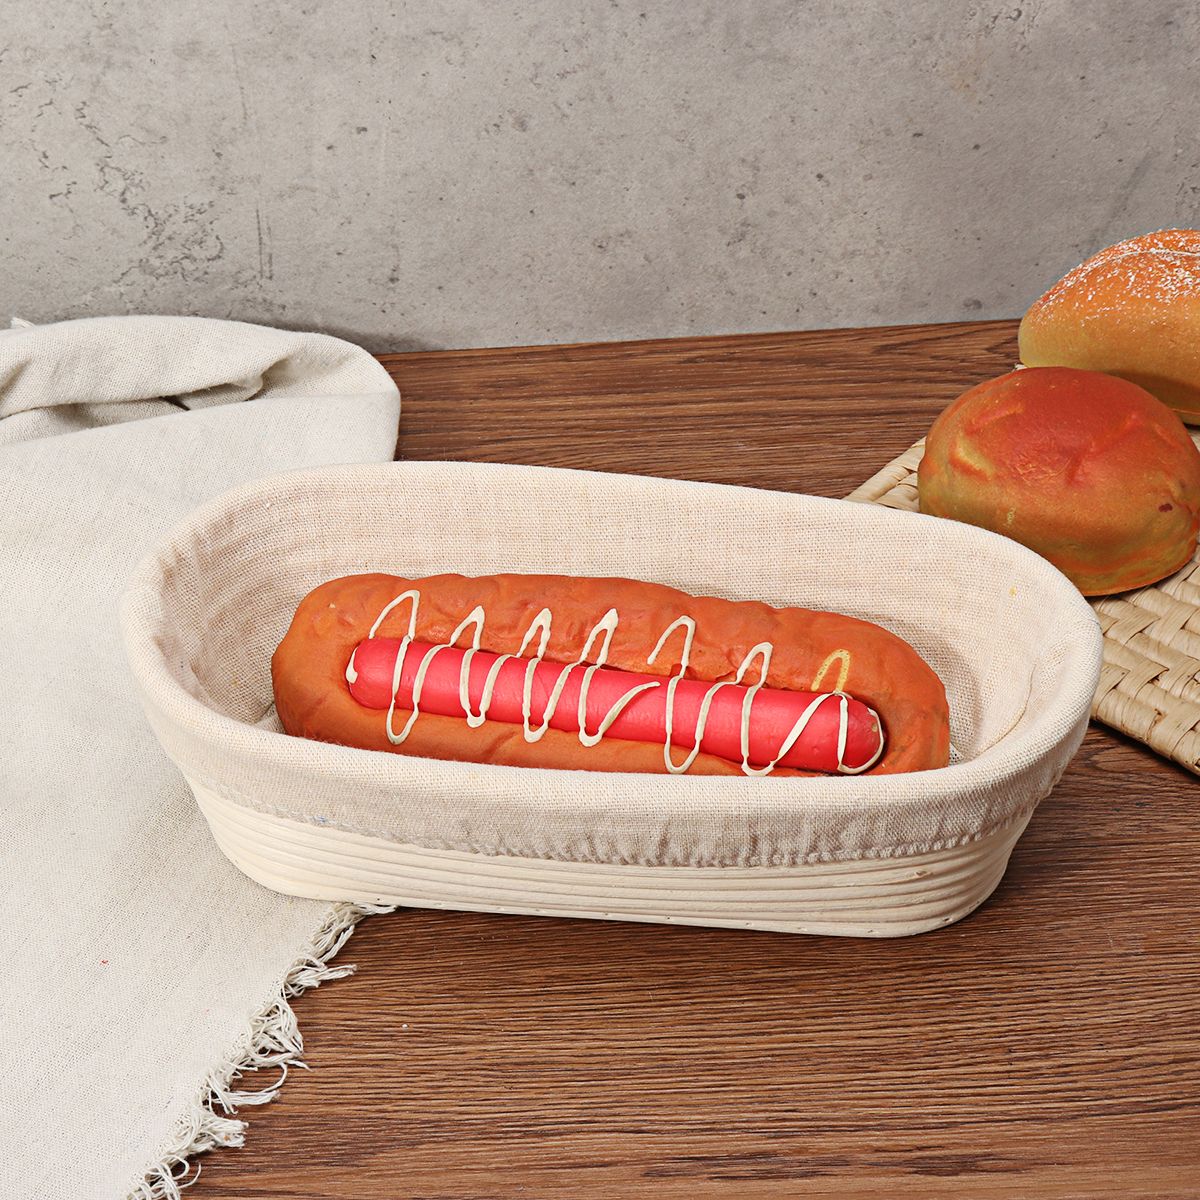 Bread-Baking-Tool-Kits-9-Inch-Banneton-Proofing-Basket-Stencil-Bag-DIY-Set-Tools-1722159